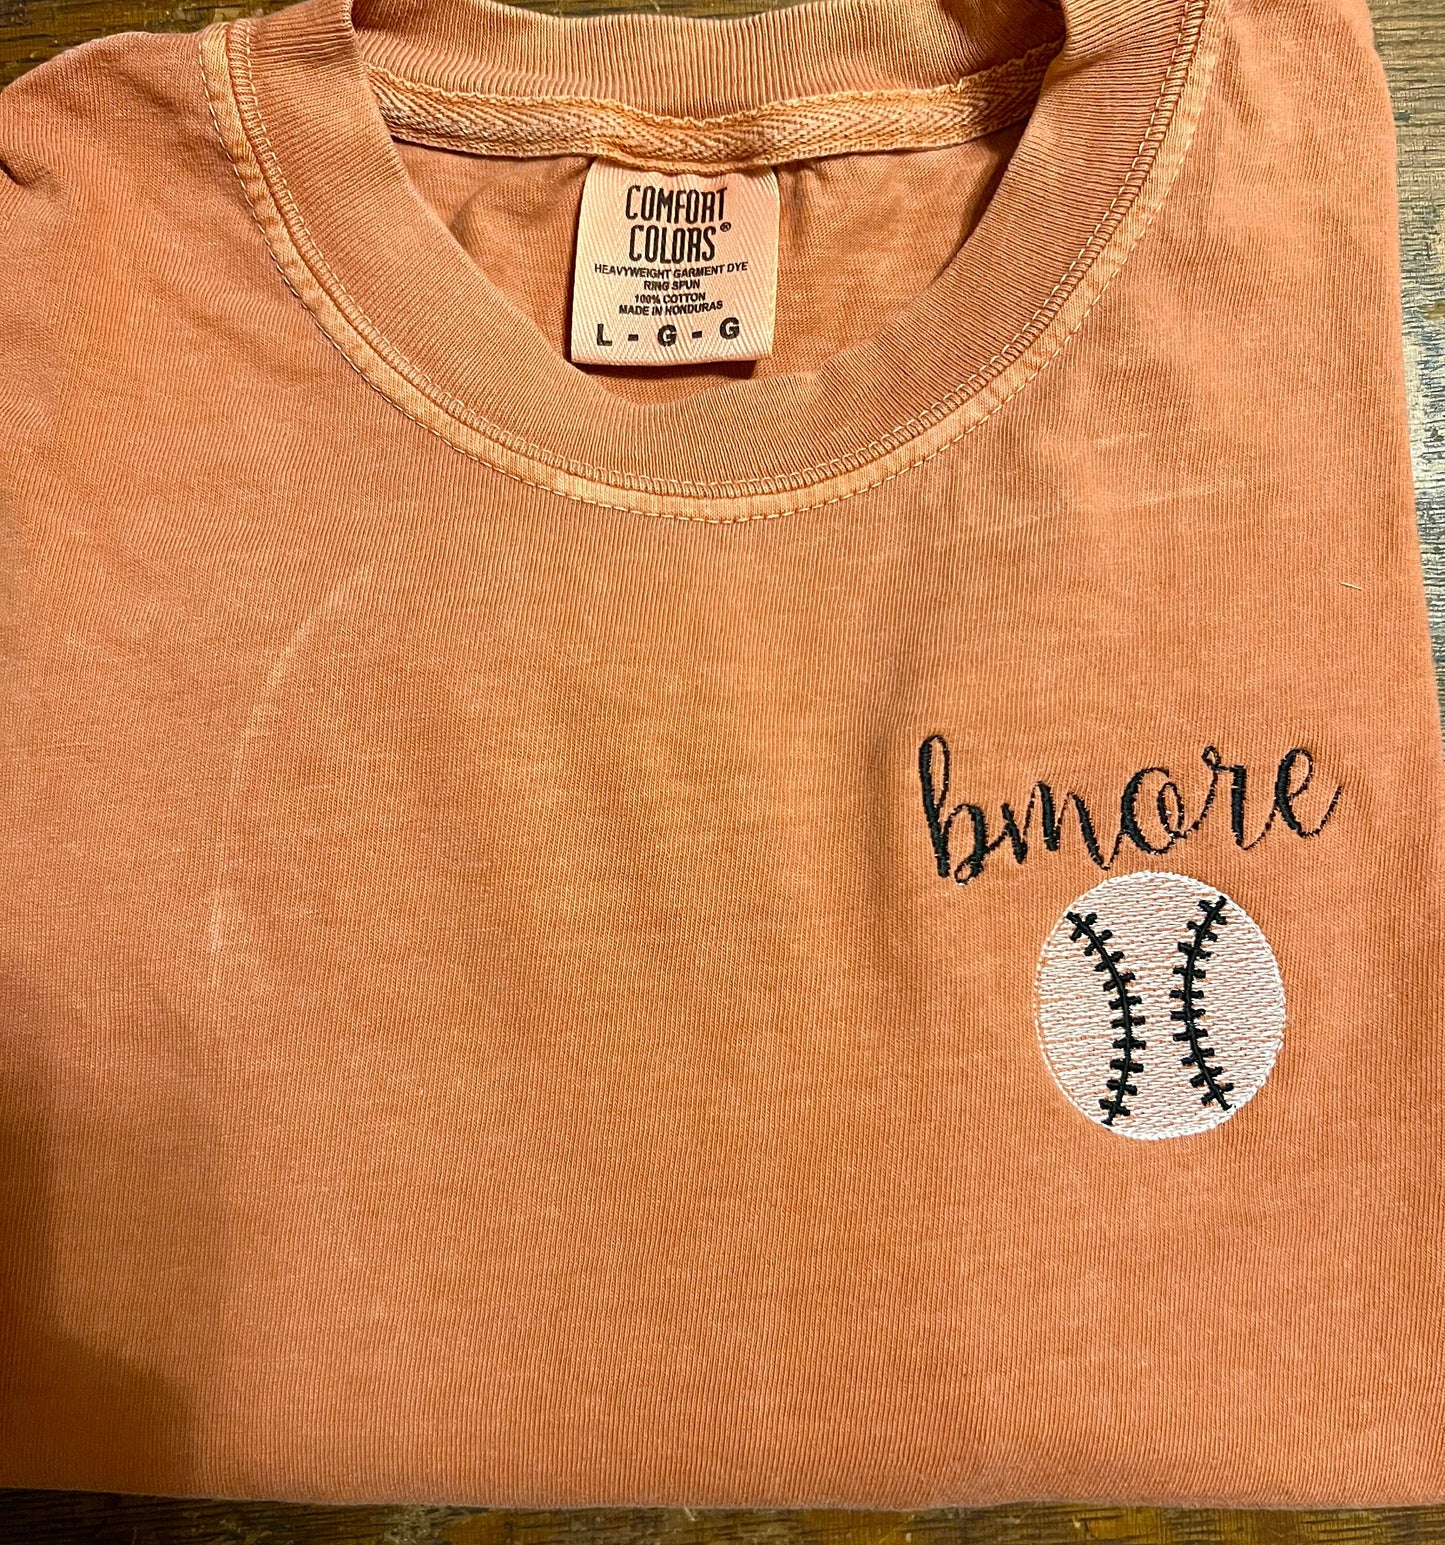 Football Tshirt Comfort Colors Baseball Tshirt Gifts For Her Football Season Baseball Season Baltimore Football Baltimore Baseball